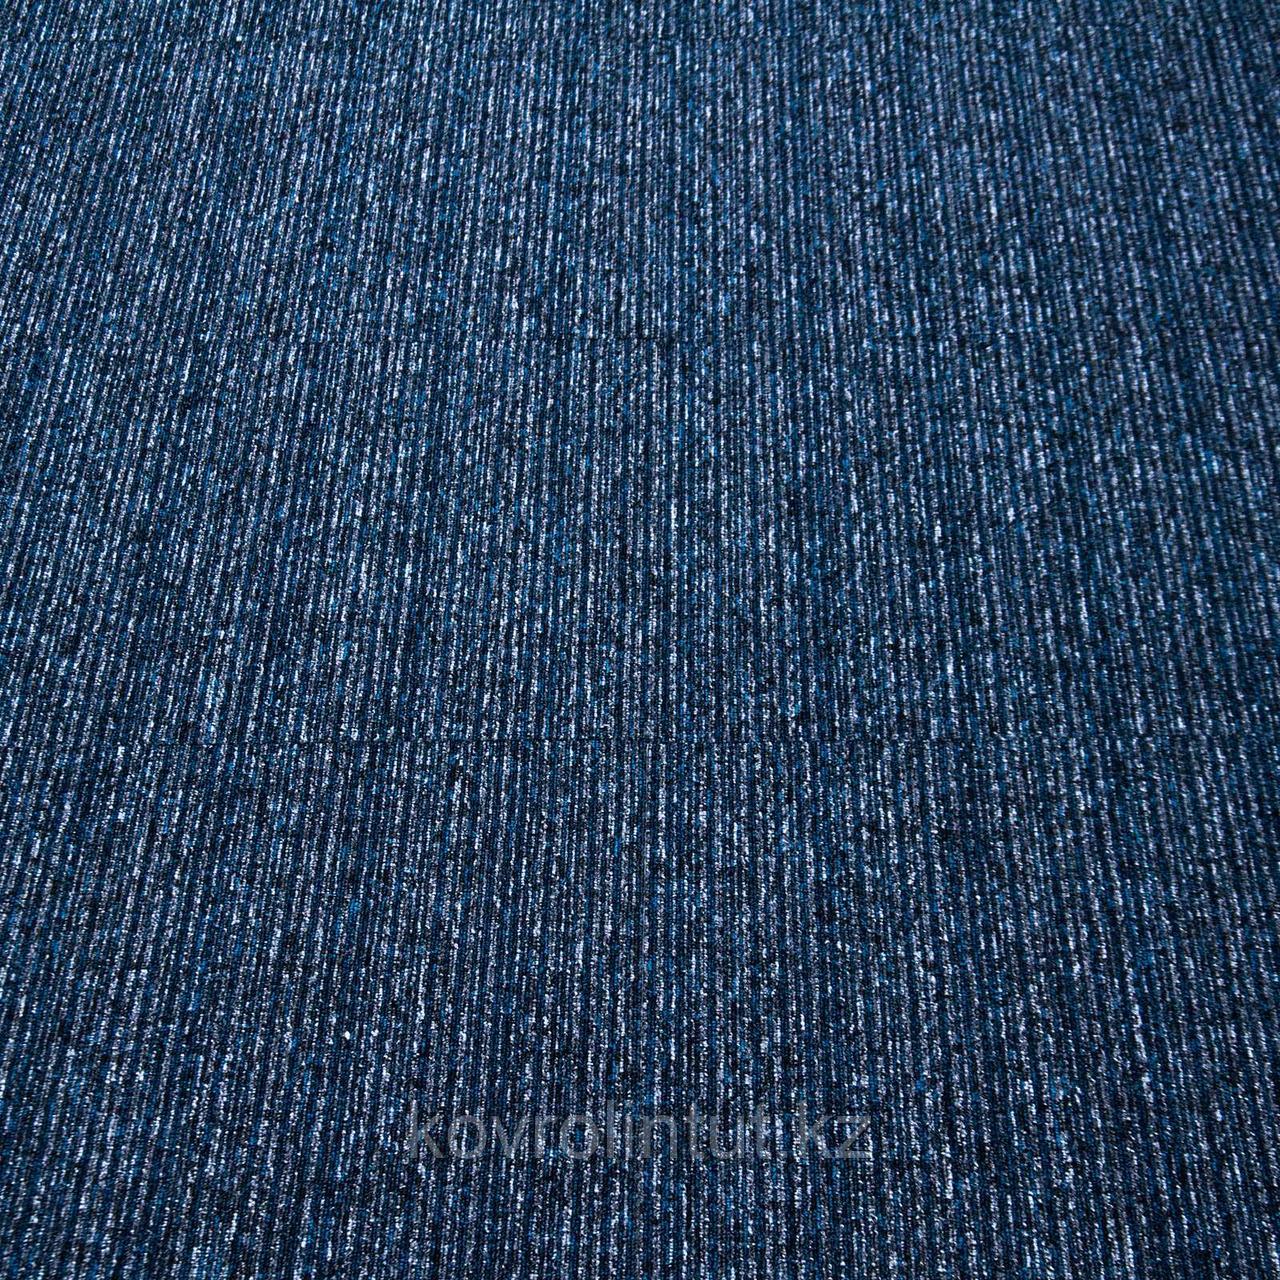 Плитка ковровая Сondor, Solid stripe 183, 50х50, 5м2/уп